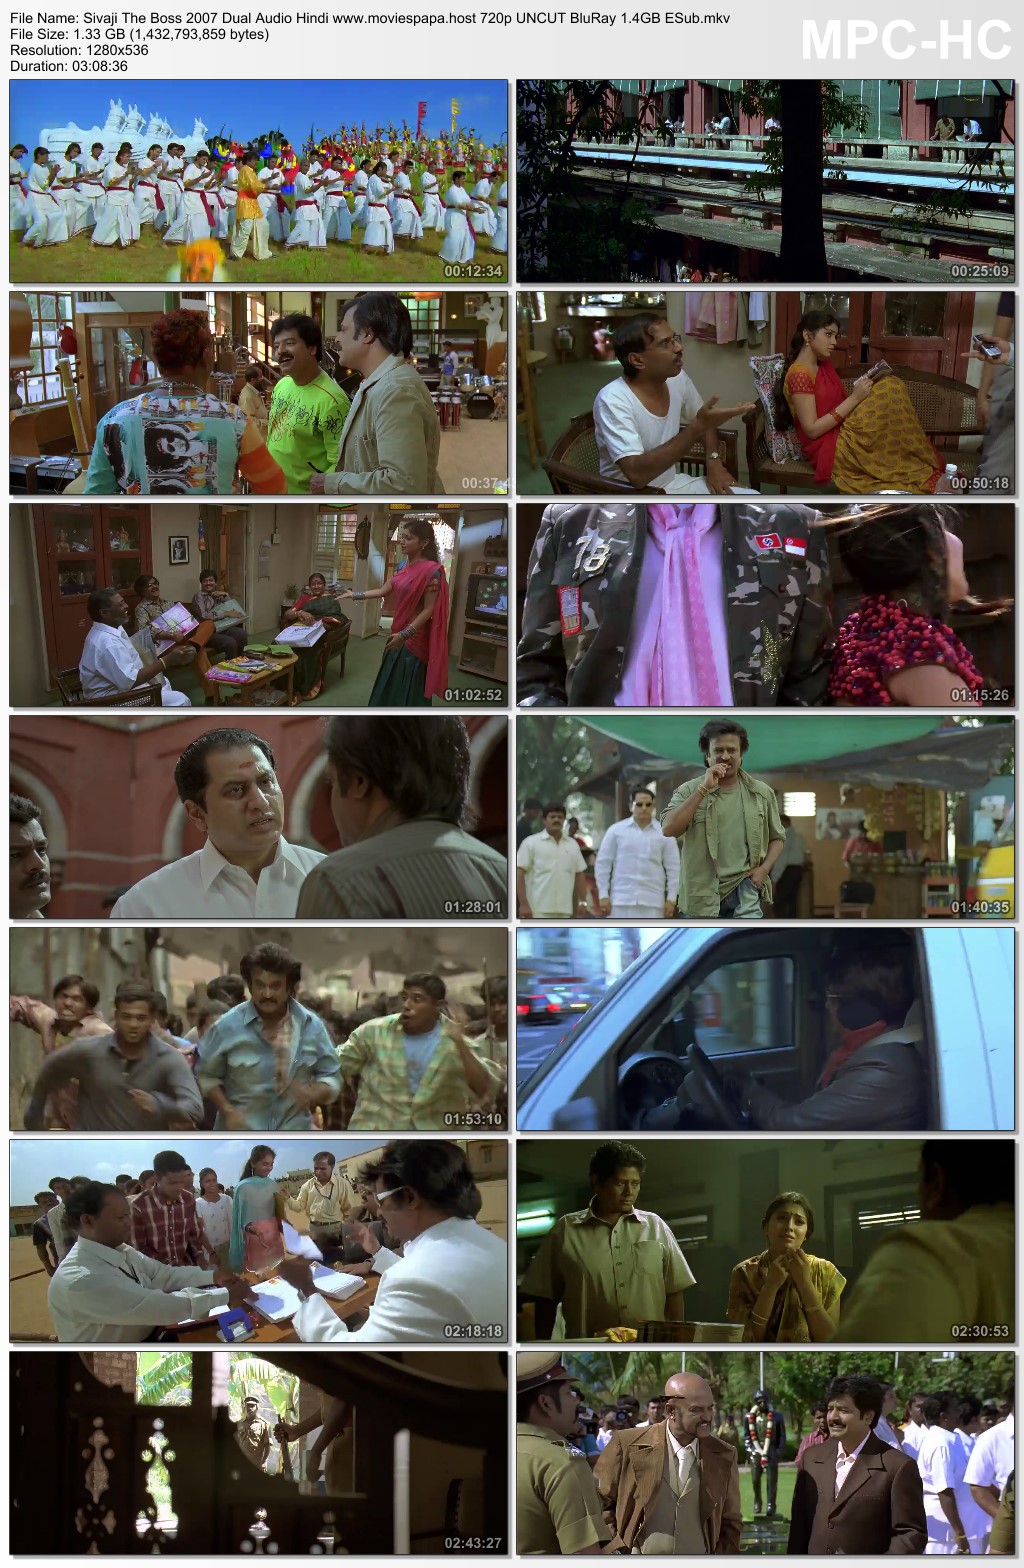 sivaji the boss movie in hindi watch online